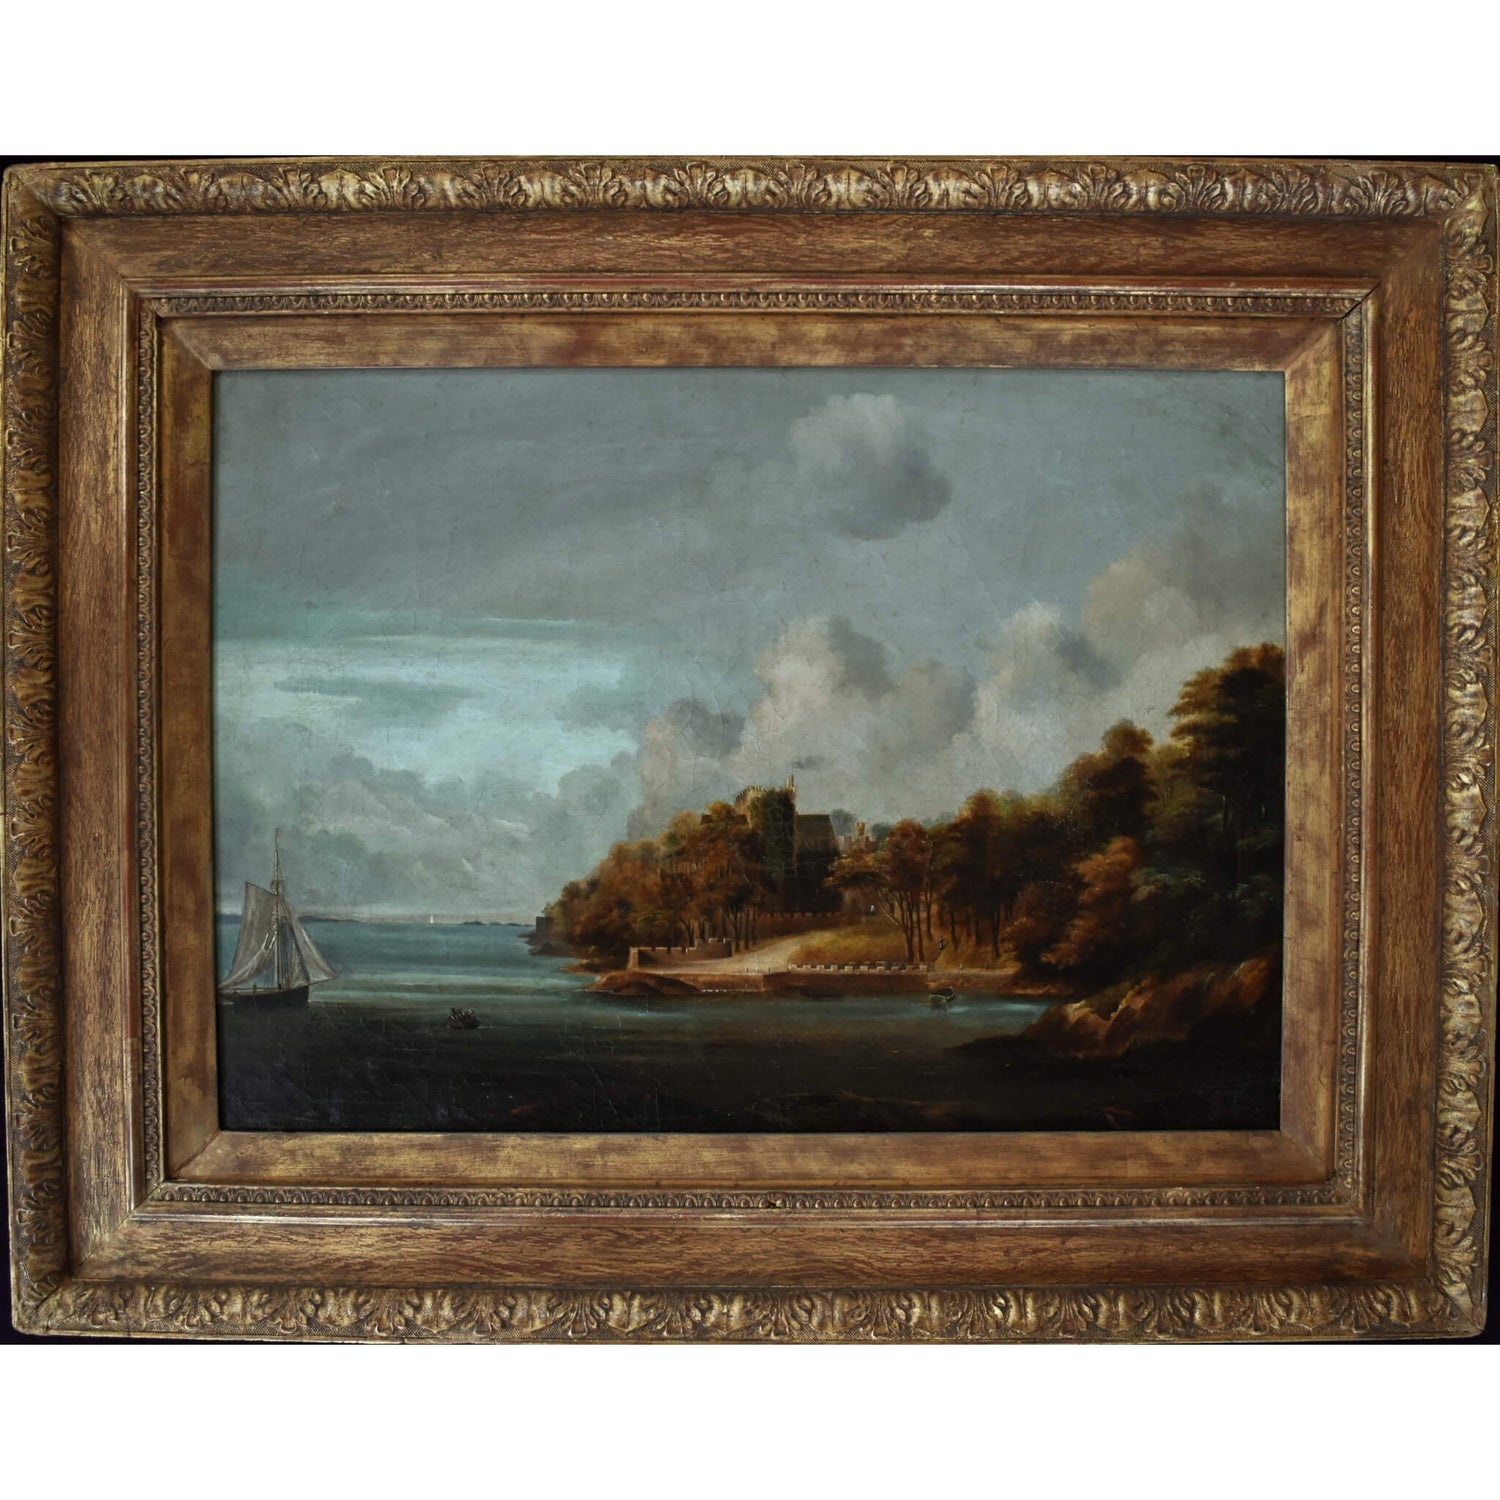 Antique oil painting coastal landscape with a castle 19th century European school for sale at Winckelmann Gallery